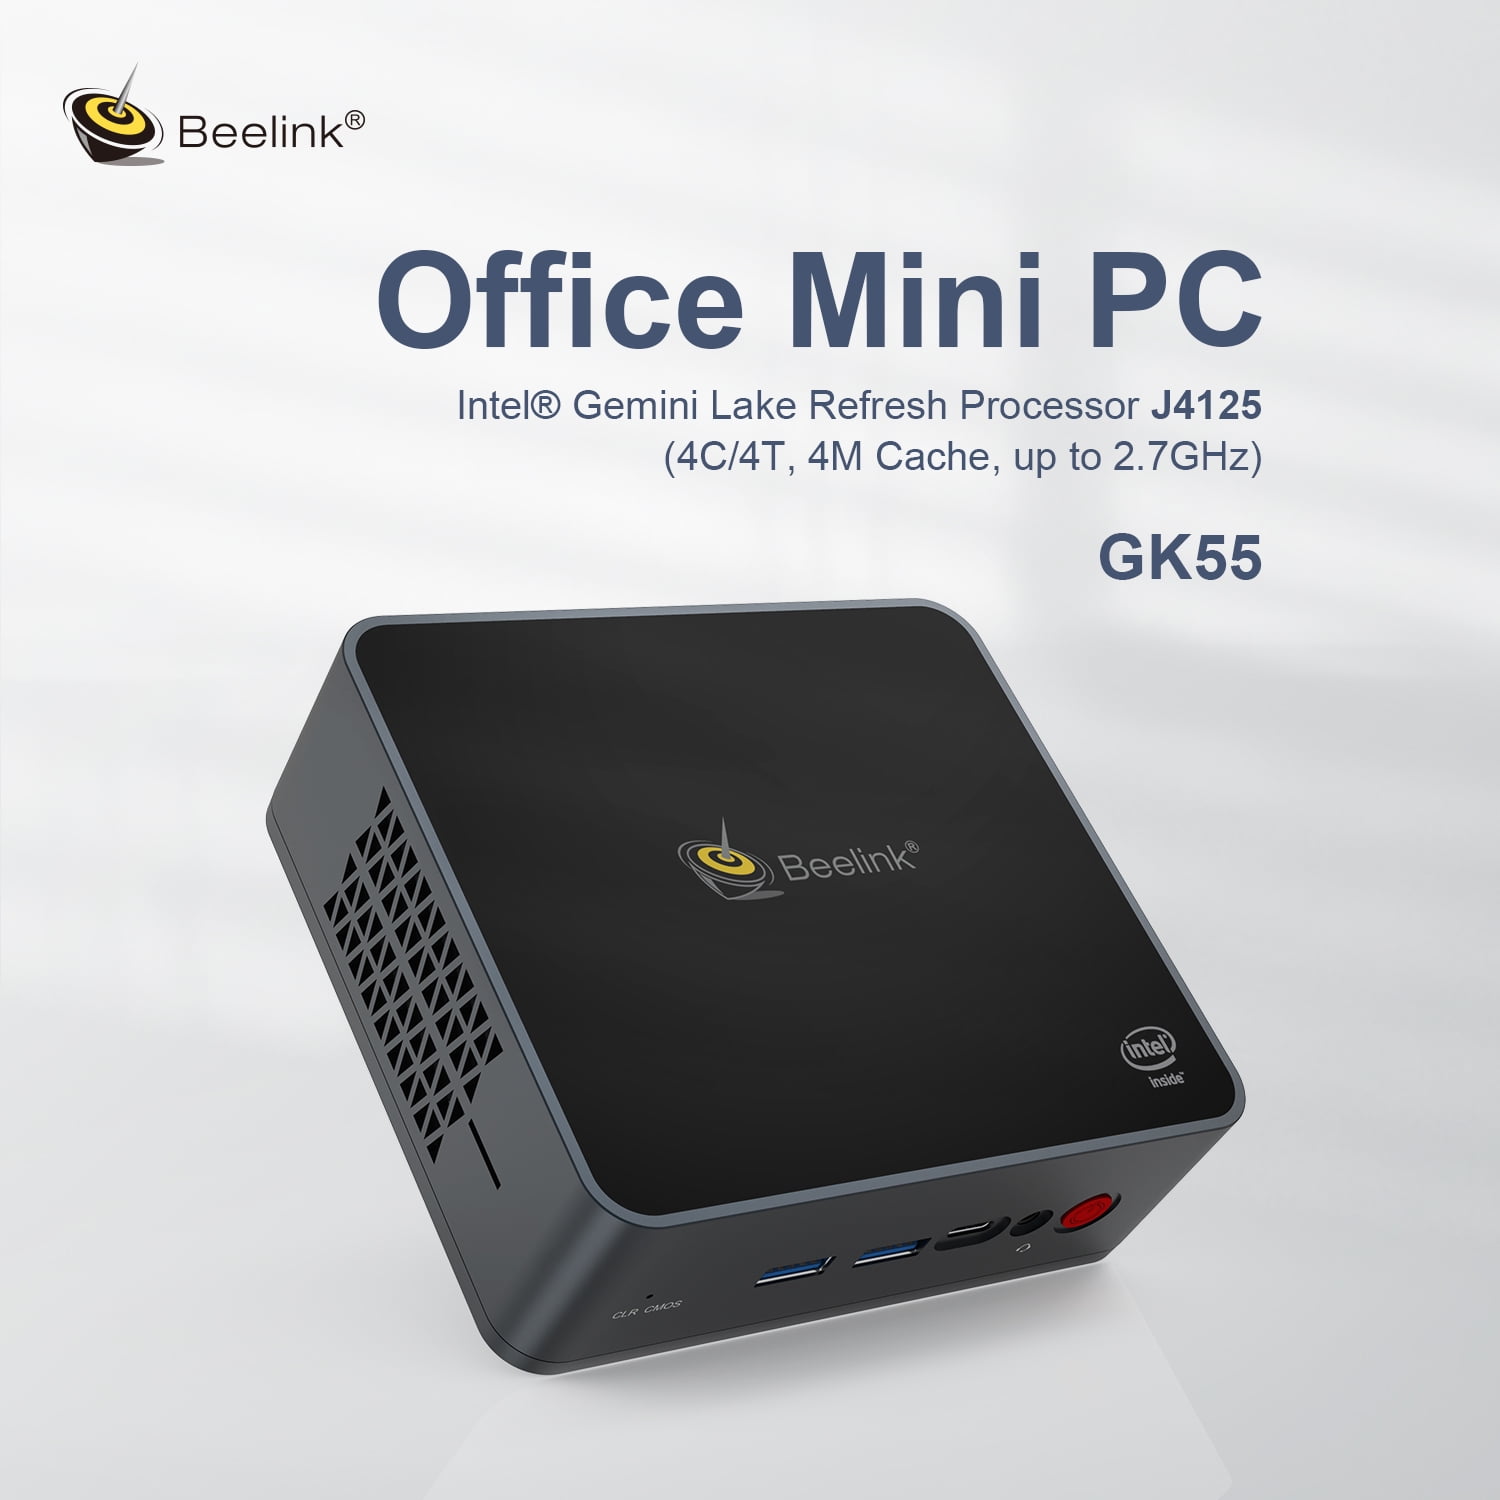 Mini PC Beelink GK55 Intel Gemini Lake Processor J4125 up to 2.7GHz Windows 10 Pro,8G LPDDR4/256G SSD High Performance Business Mini Computer,4K UHD,2.4G/5G Dual WiFi,BT4.0,Dual HDMI Ports,Dual Gigabit Ethernet